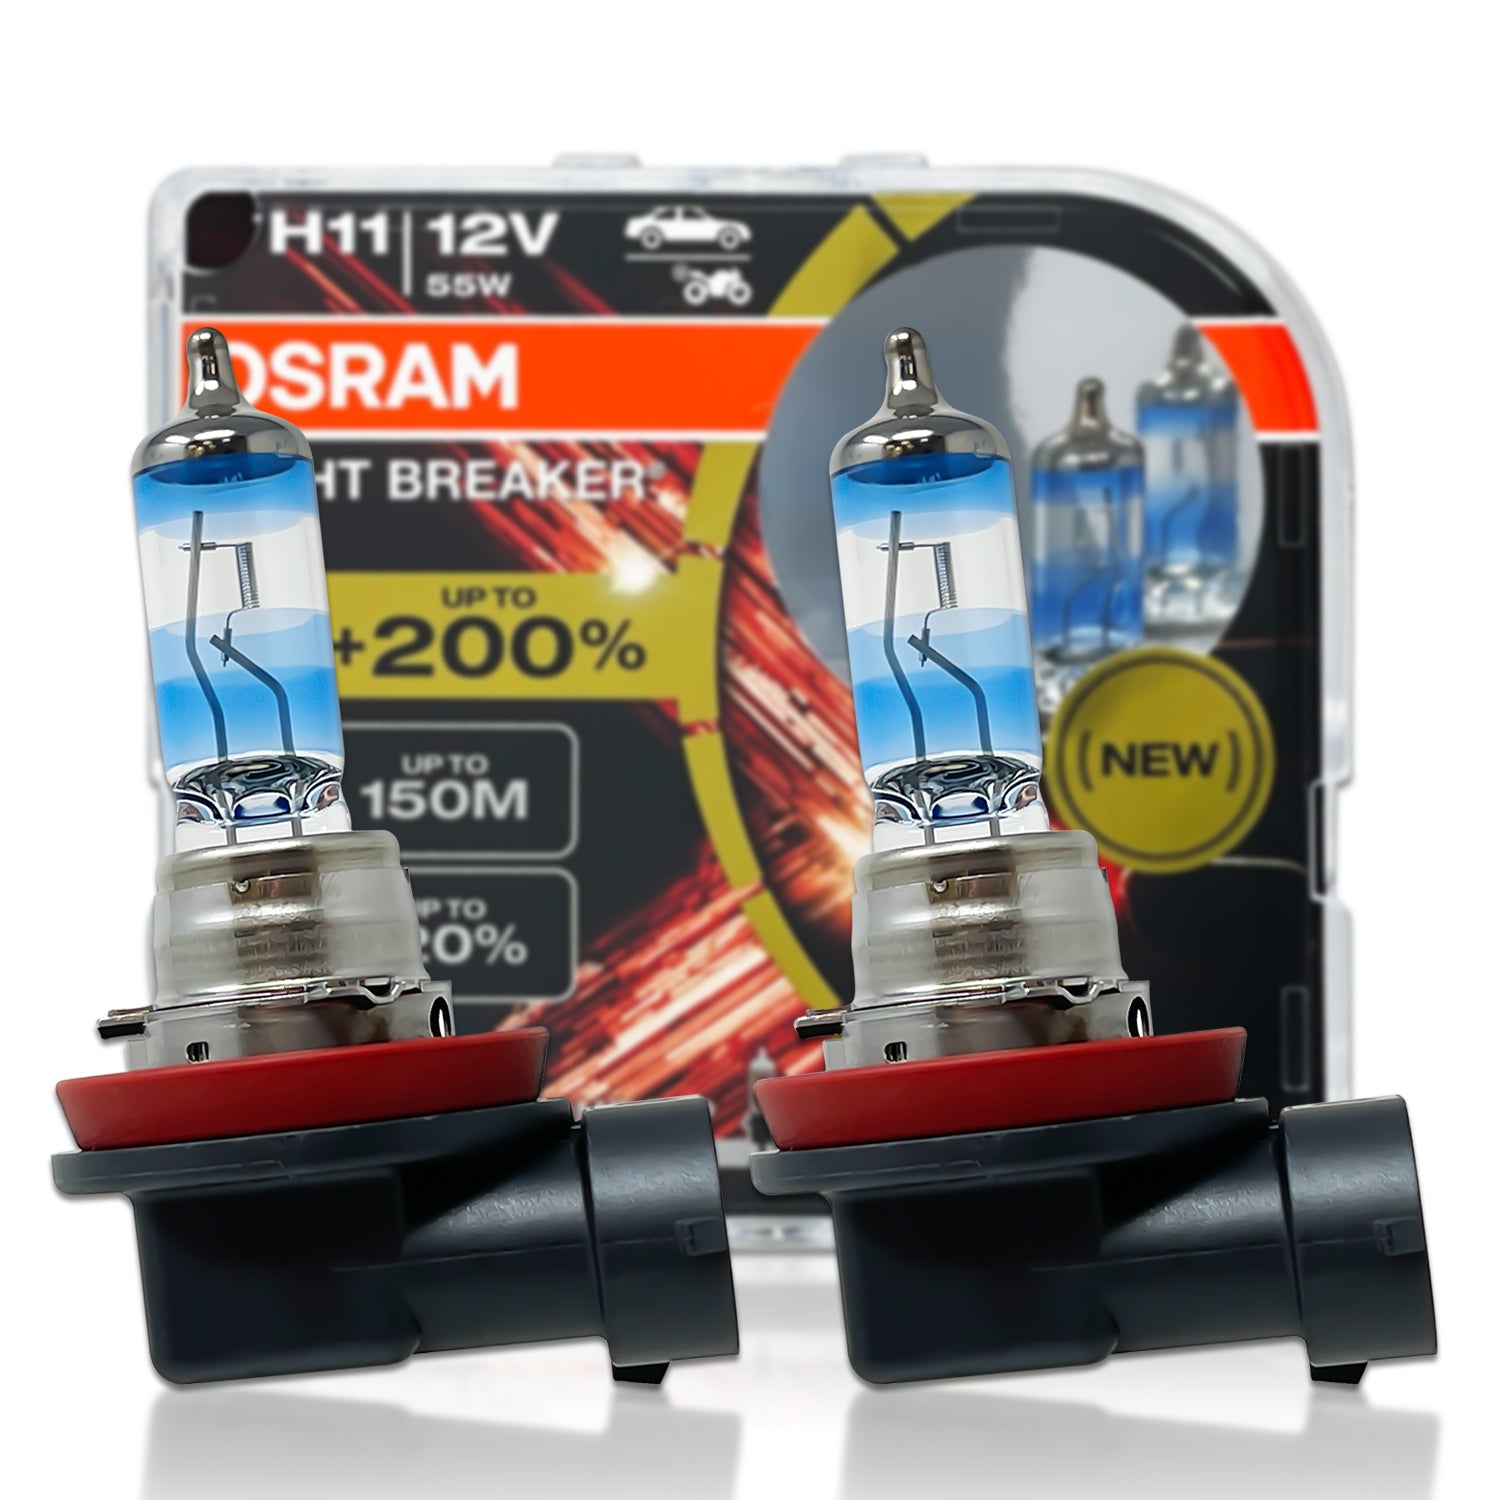 Osram H4 Night Breaker Laser 55W 2-pack • Prices »